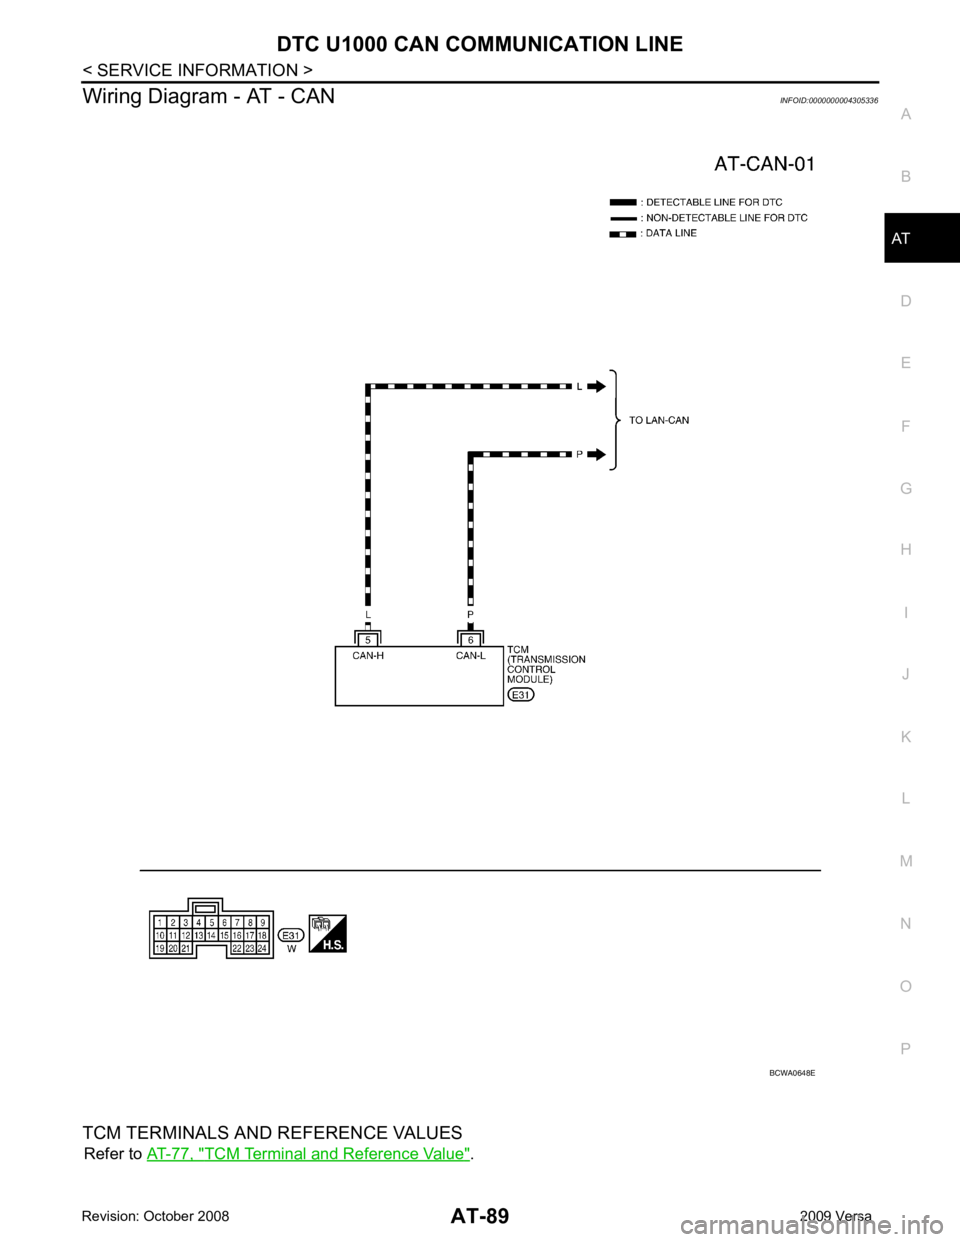 NISSAN TIIDA 2009  Service Repair Manual AT
N
O P
Wiring Diagram - AT - CAN
INFOID:0000000004305336
TCM TERMINALS AND REFERENCE VALUES Refer to  AT-77, " TCM Terminal and Reference Value " . 